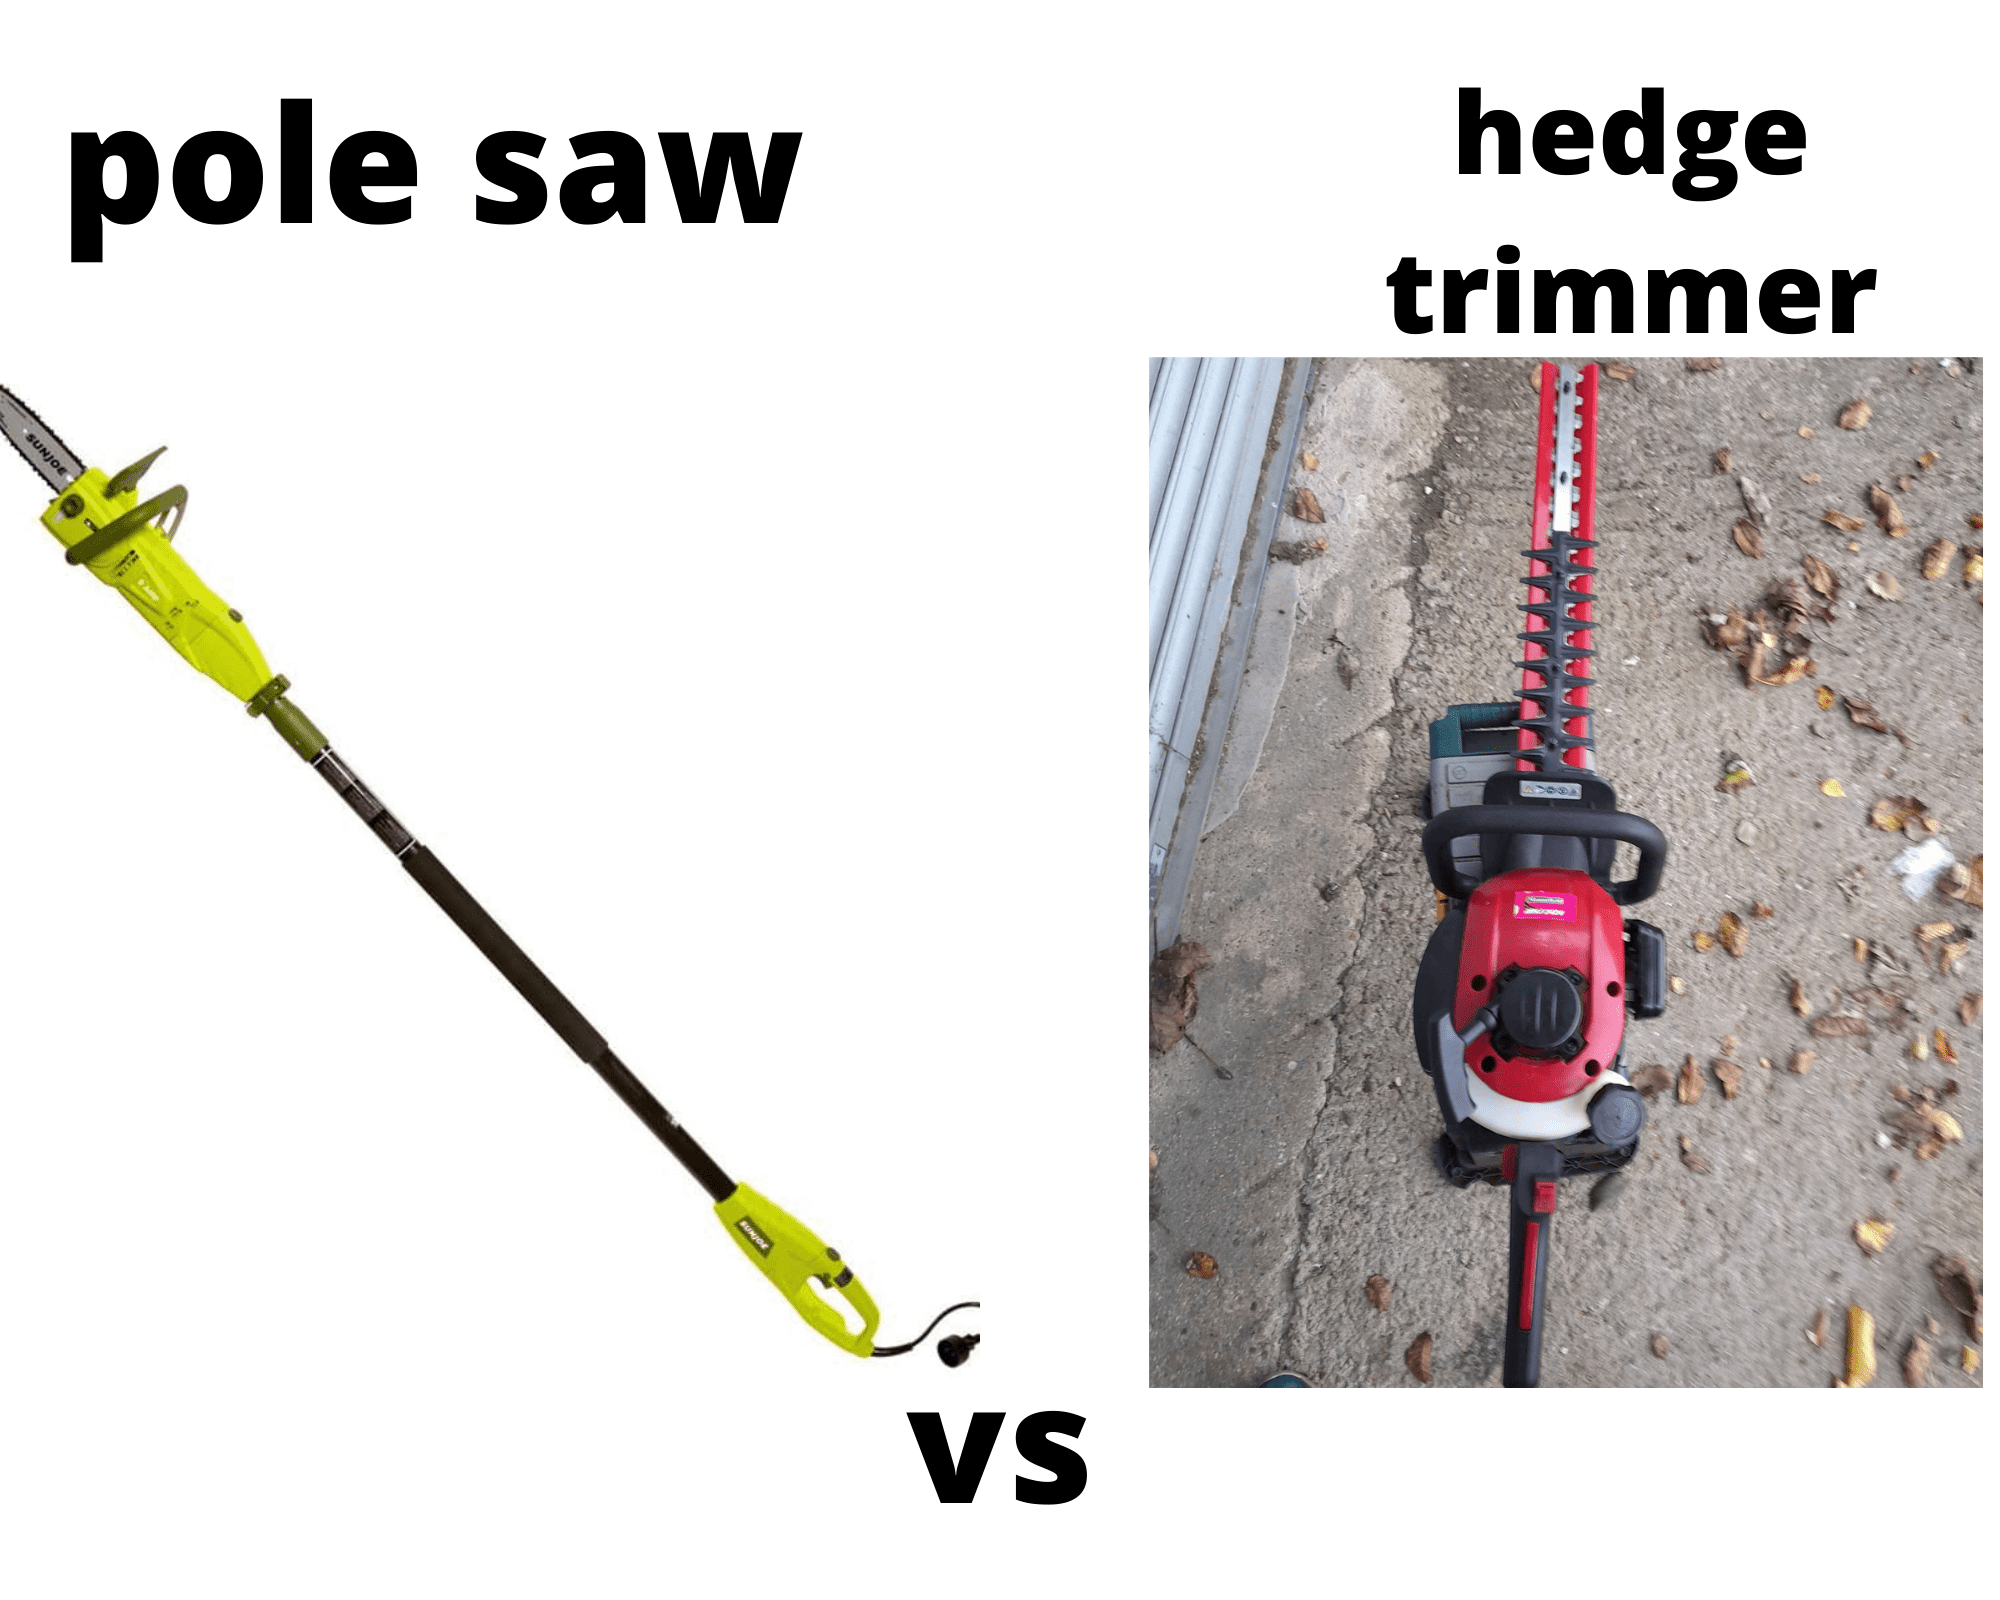 Pole Saw vs Hedge Trimmer